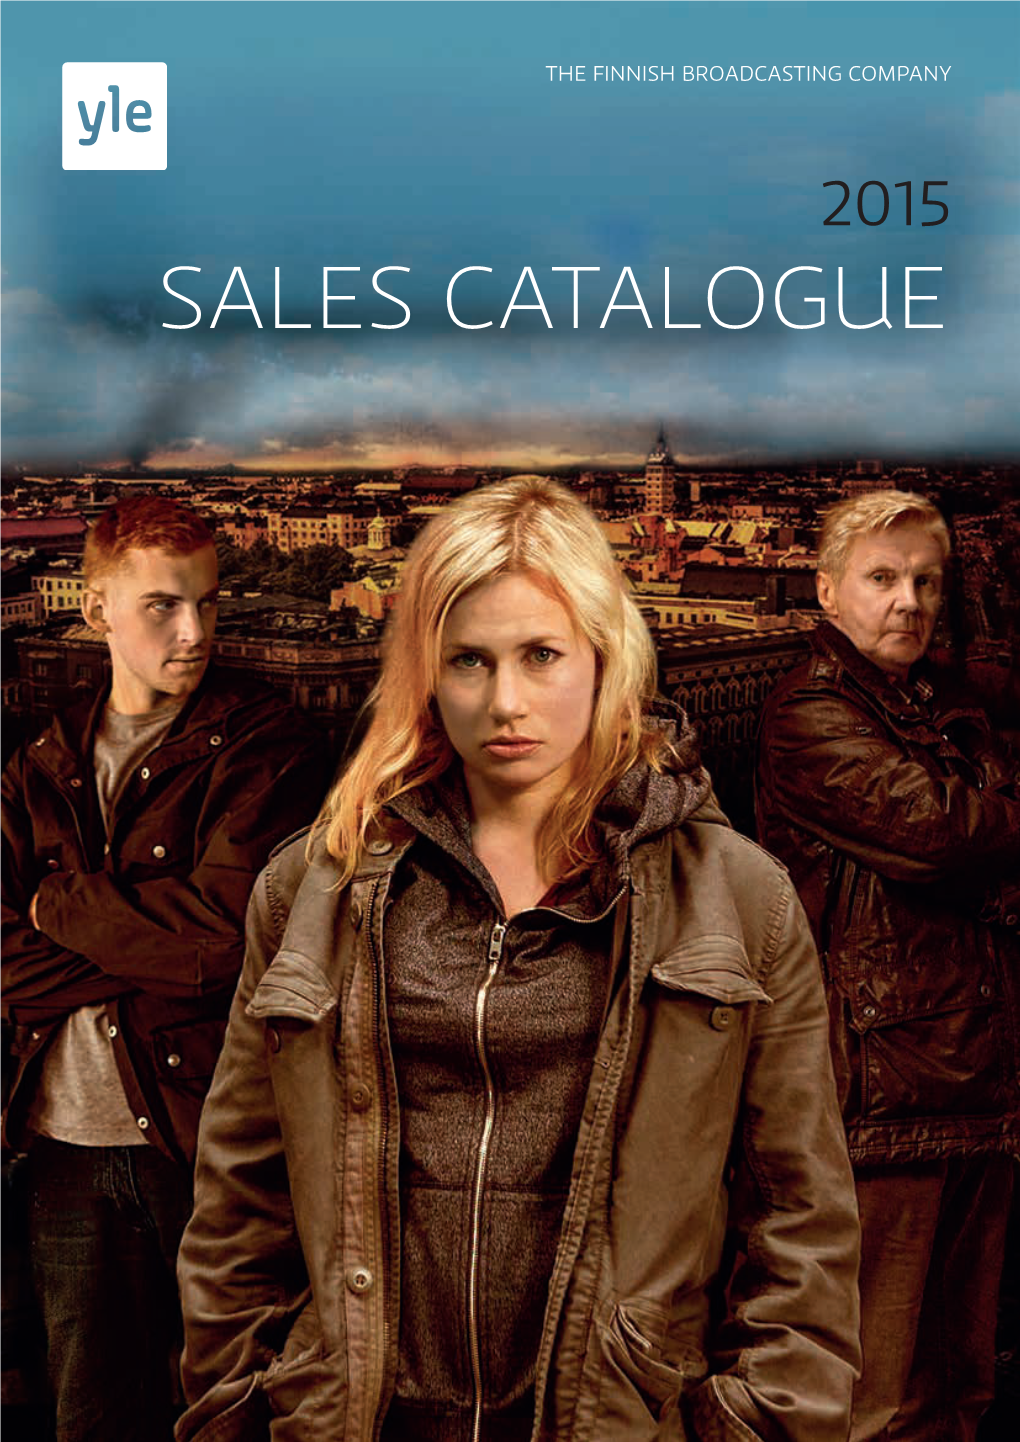 Sales Catalogue Yle Sales Catalogue 2015 Drama Nordic Crime